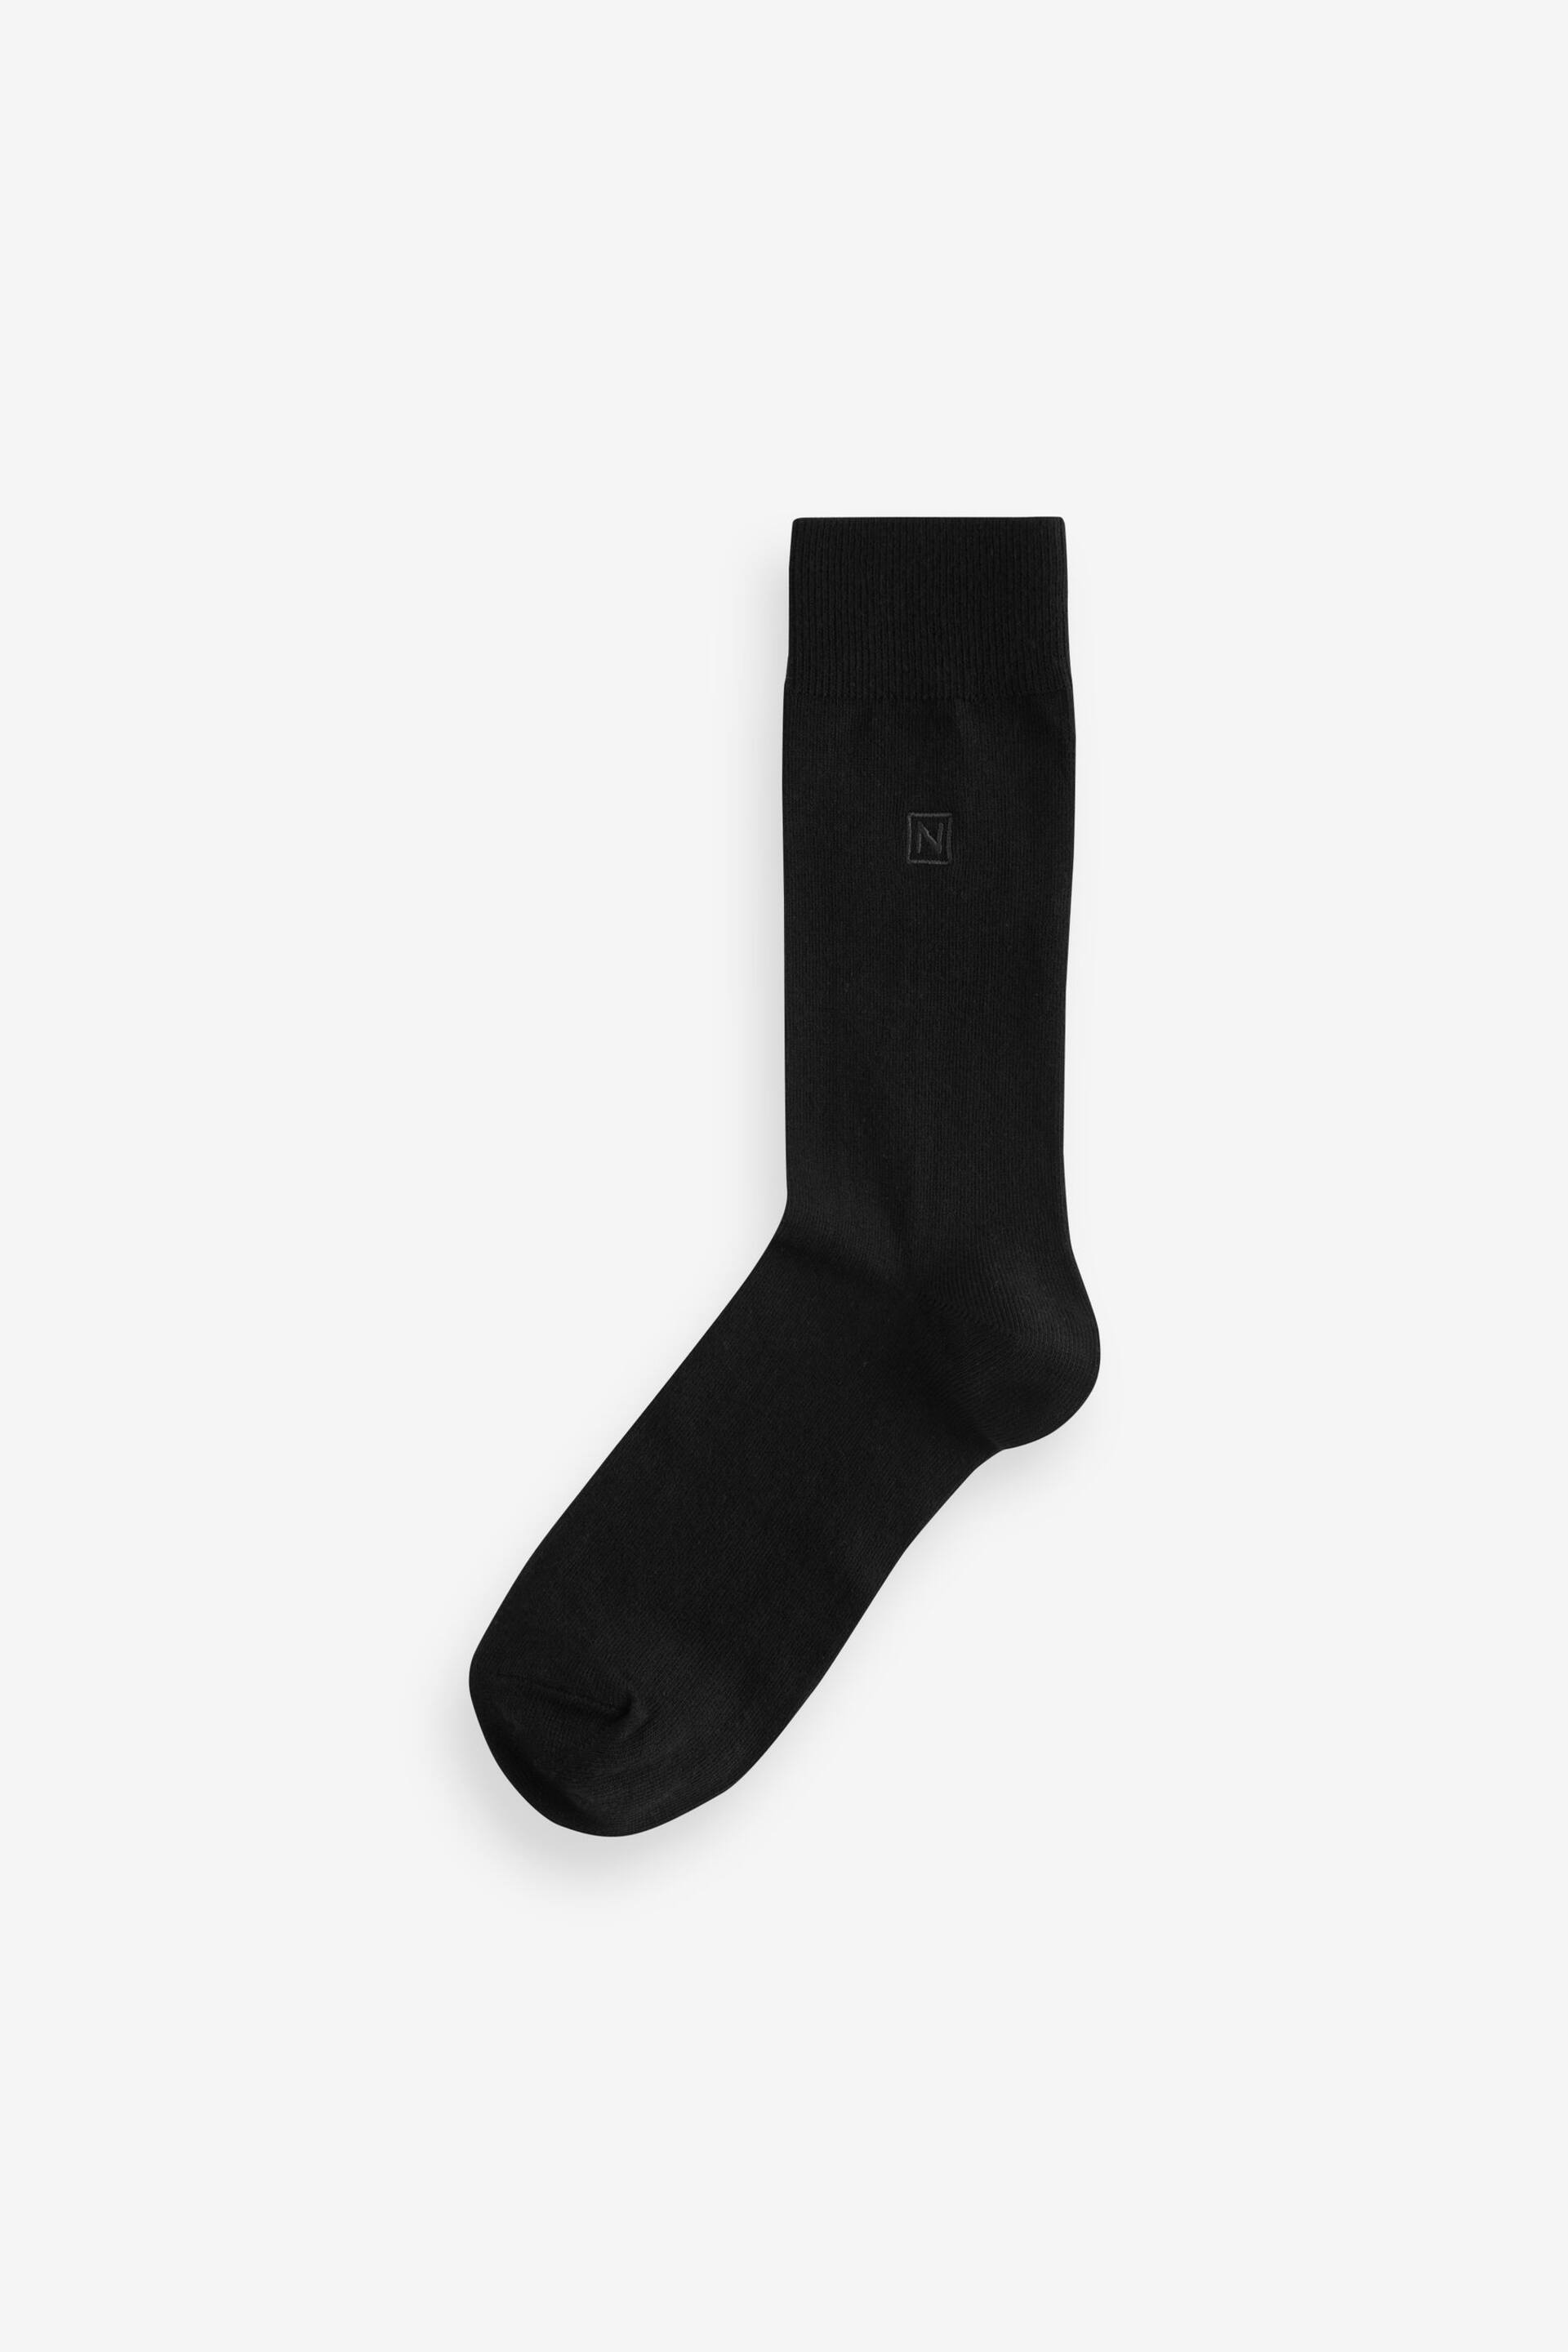 Black/Grey 10 Pack Embroidered Lasting Fresh Socks - Image 6 of 7